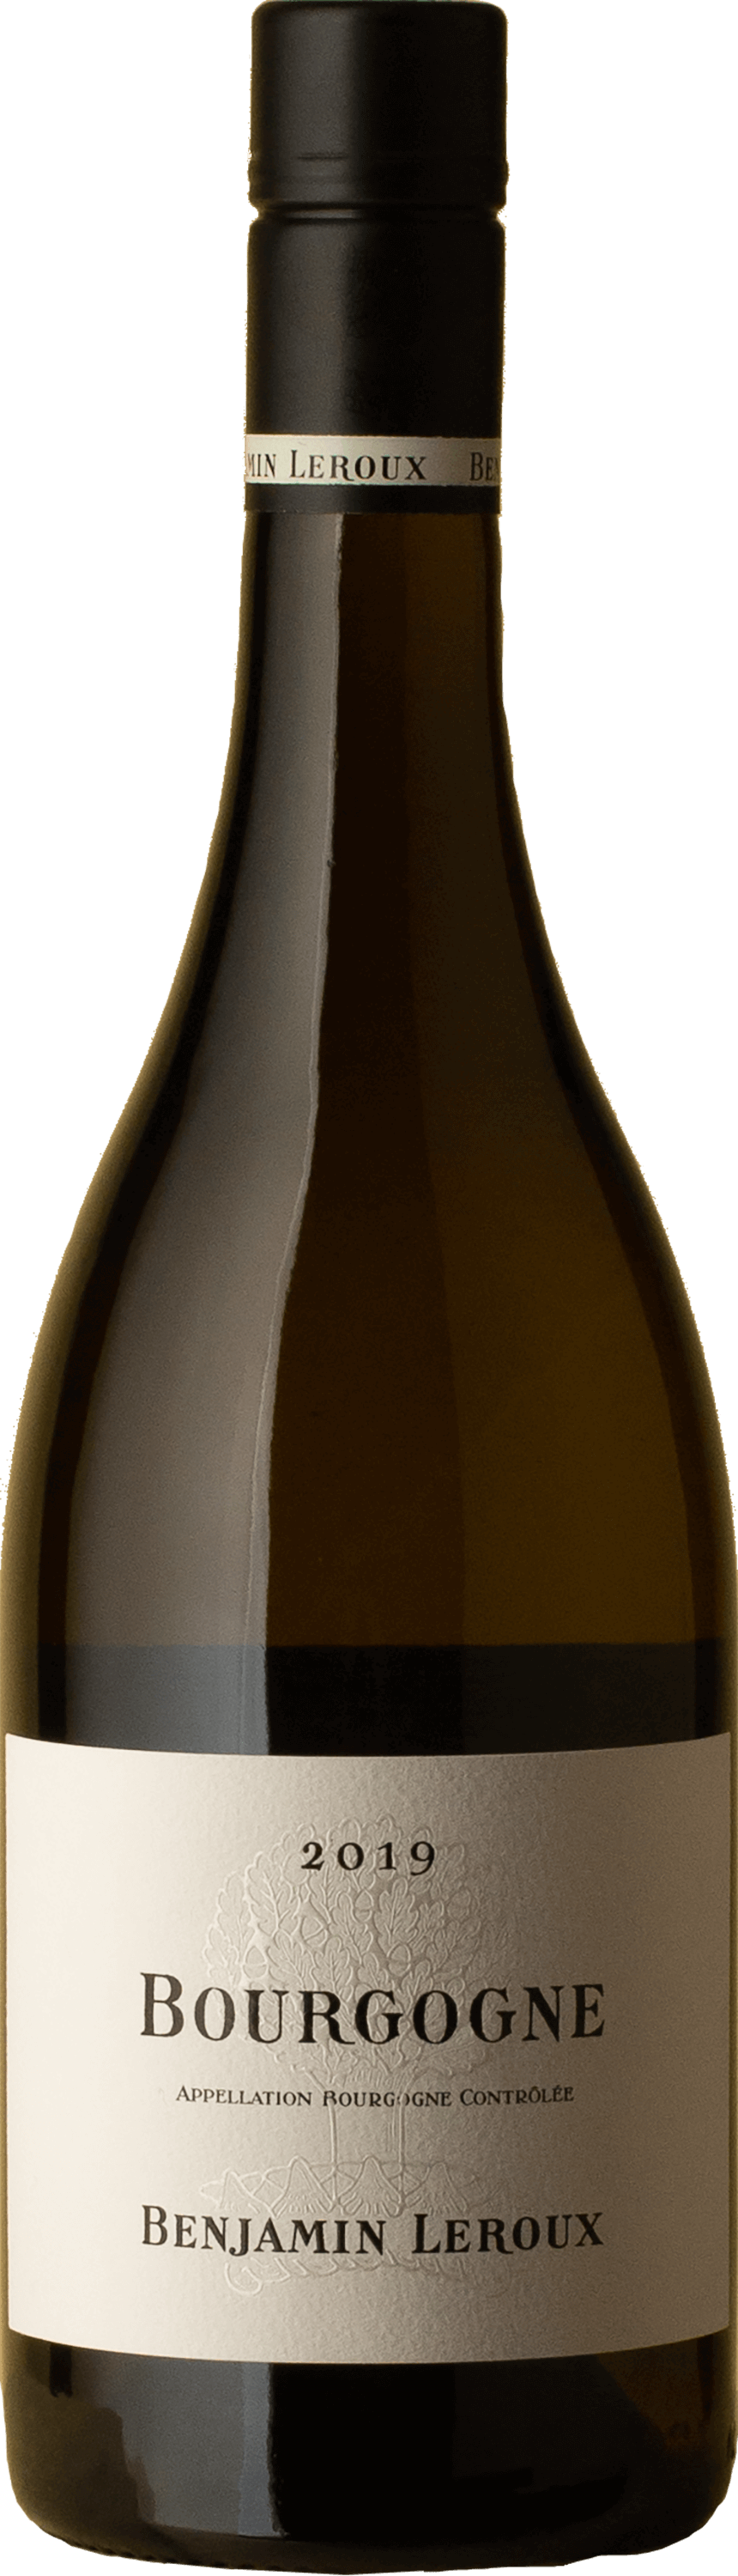 Benjamin Leroux - Bourgogne Blanc Chardonnay 2019